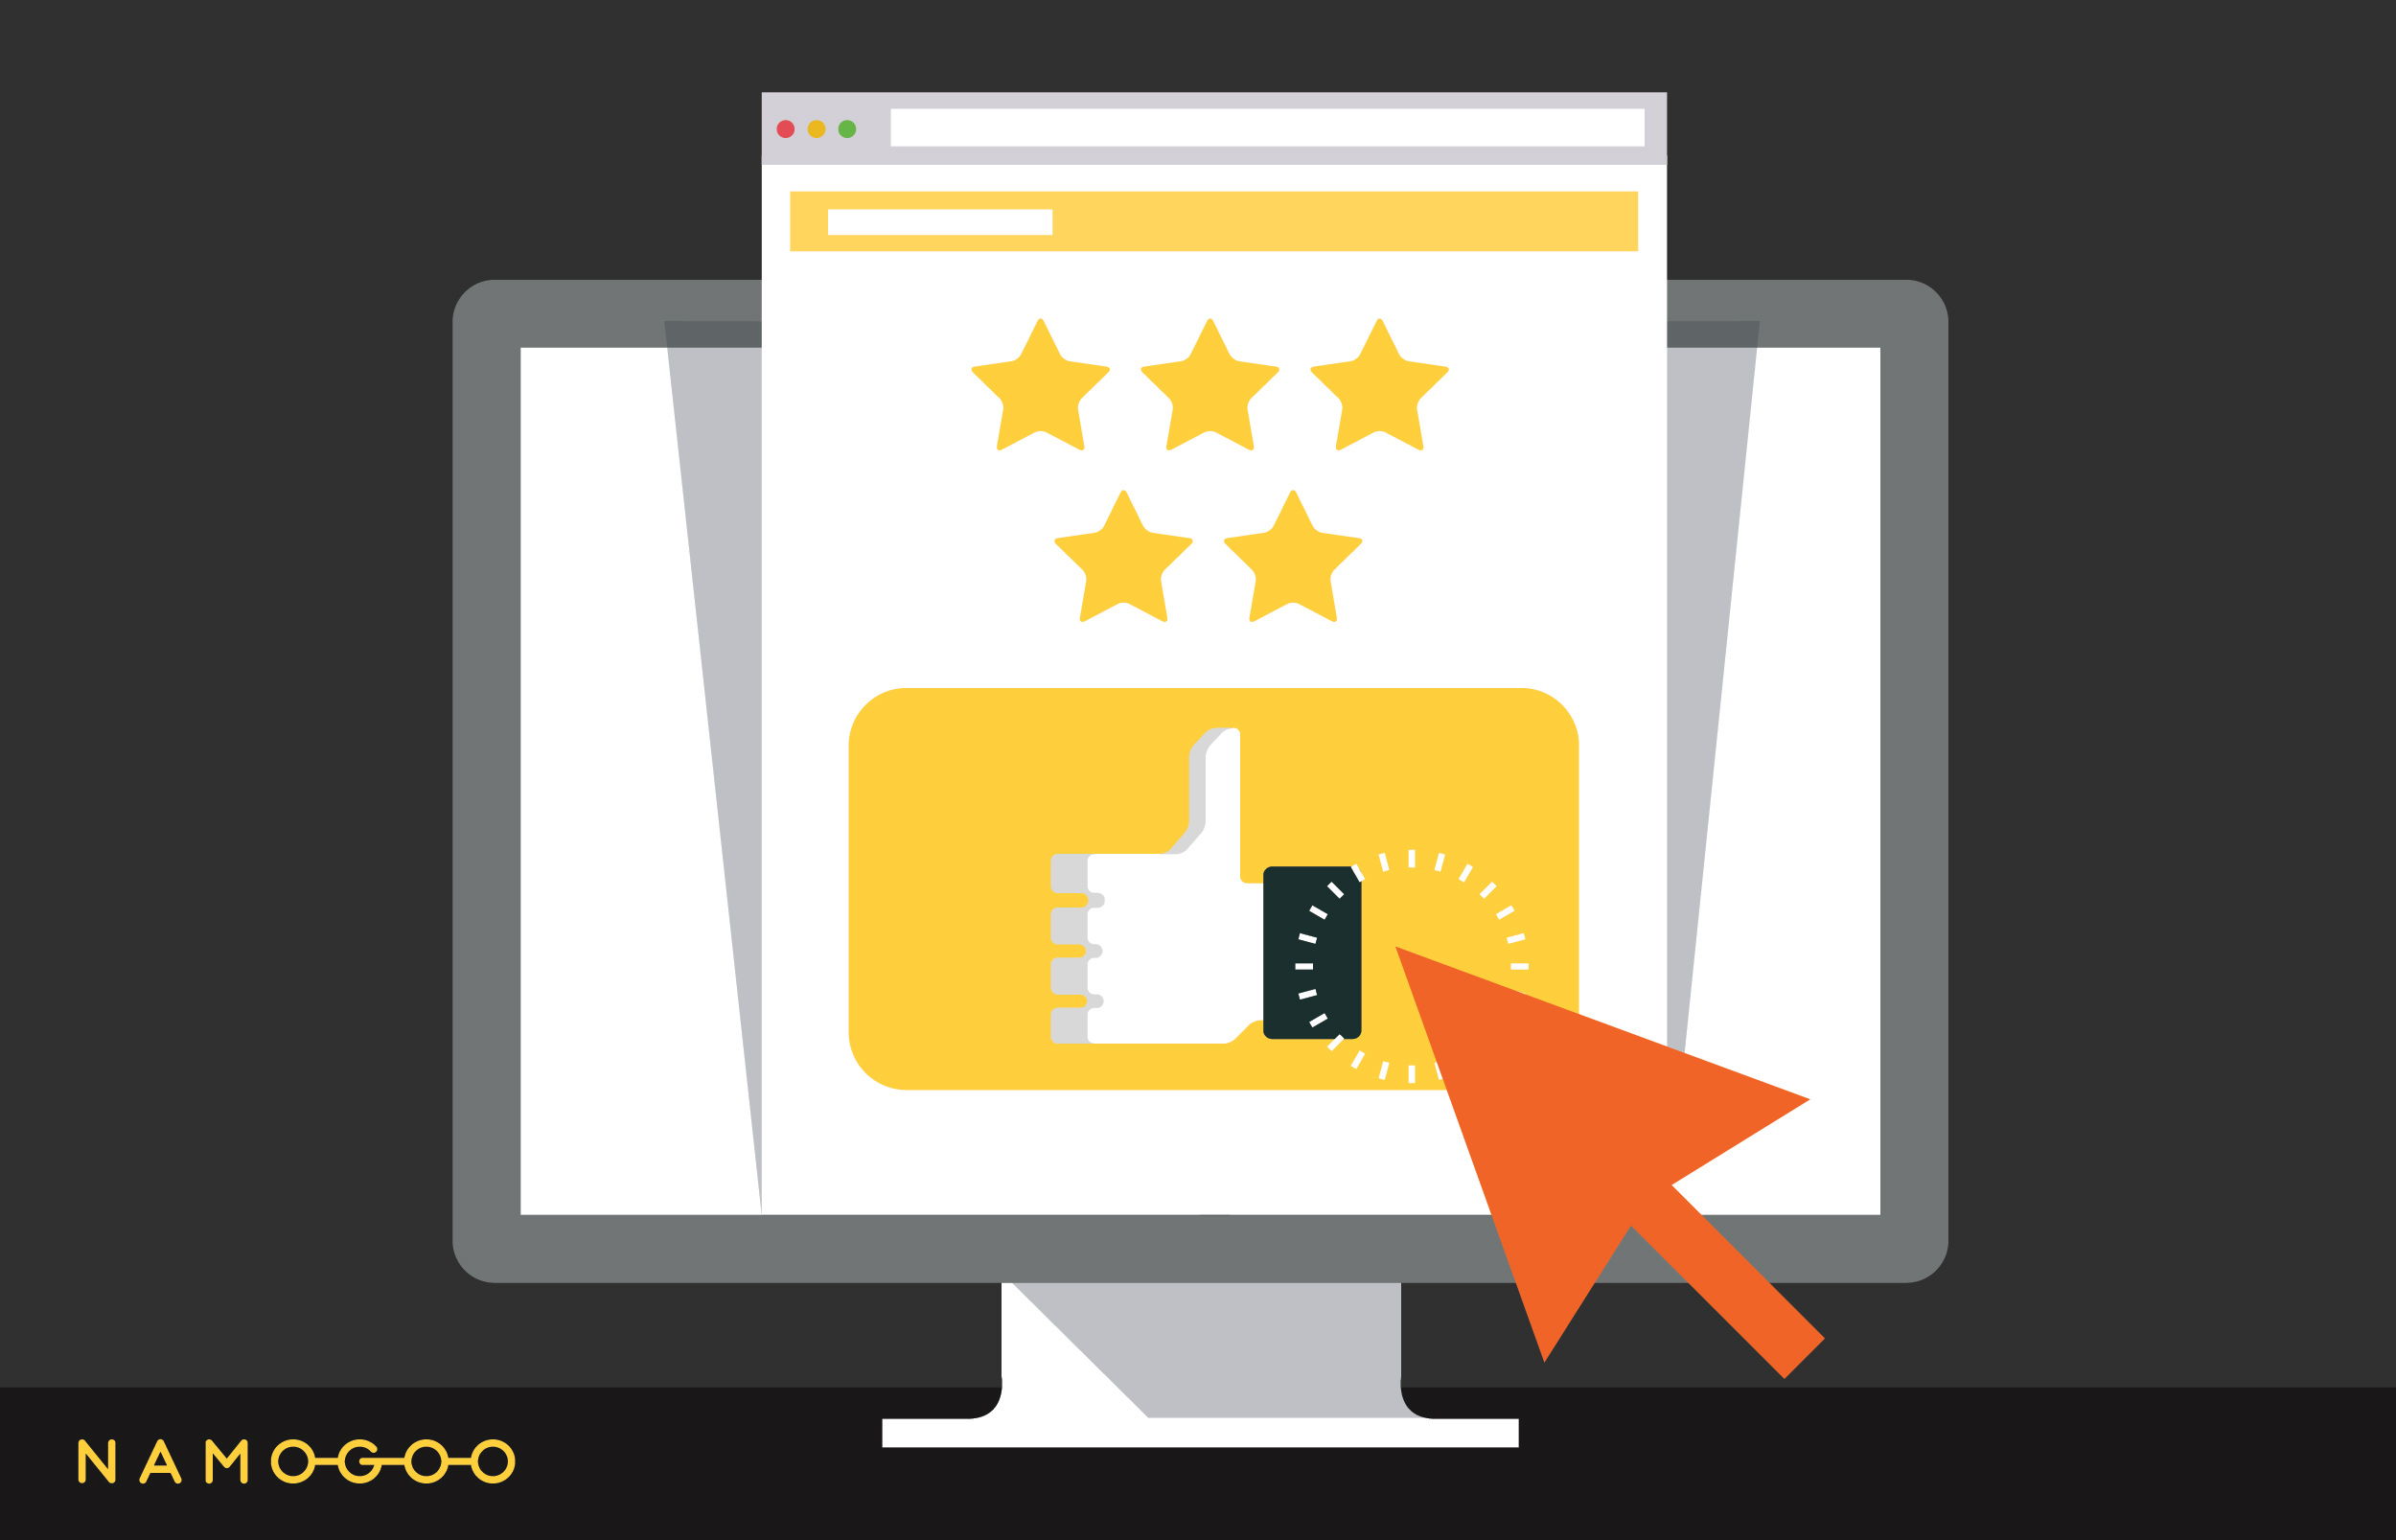 ecommerce customer reviews